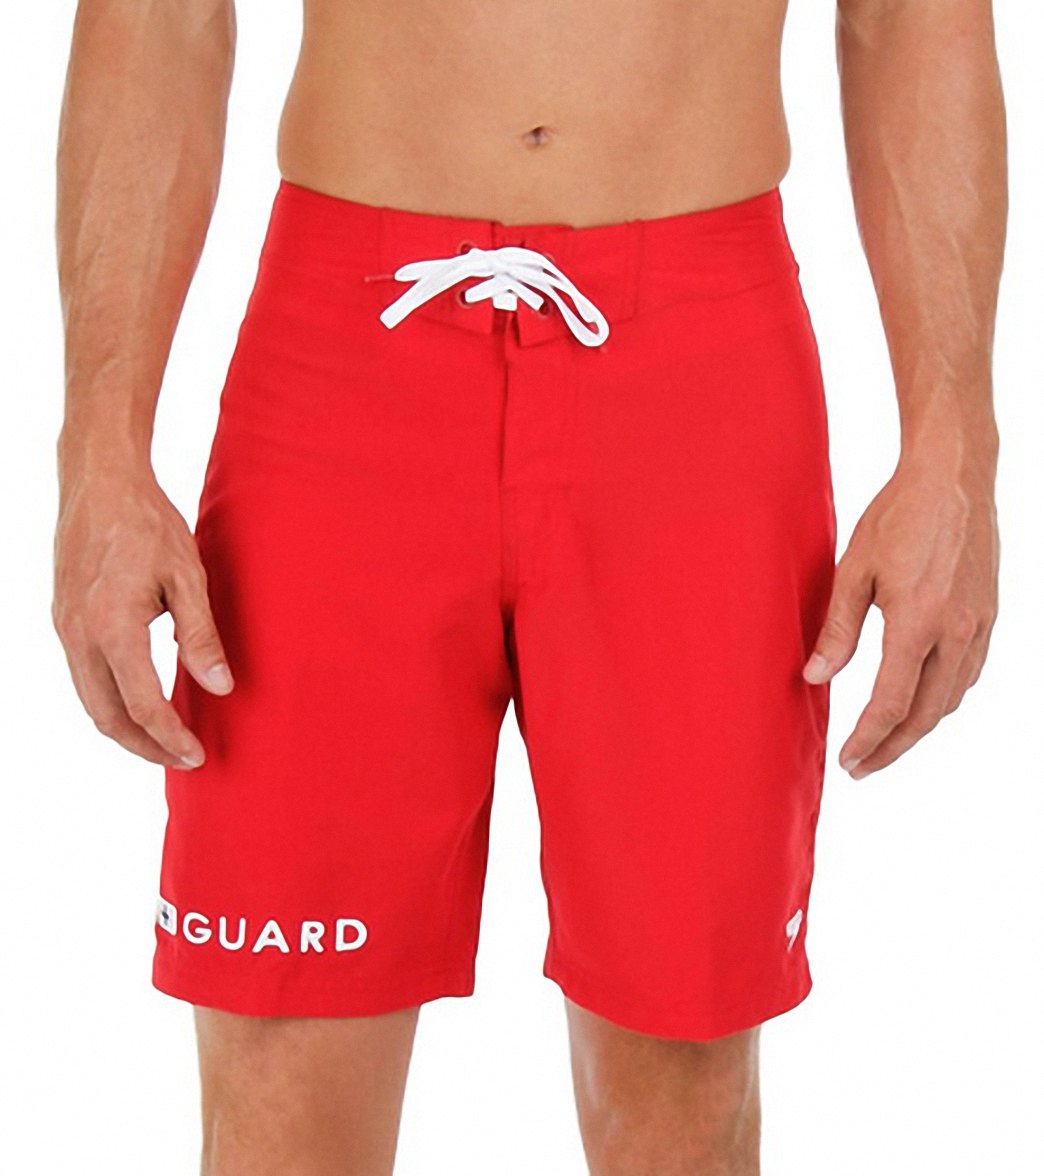 Speedo Lifeguard 21 Boardshort at SwimOutlet.com